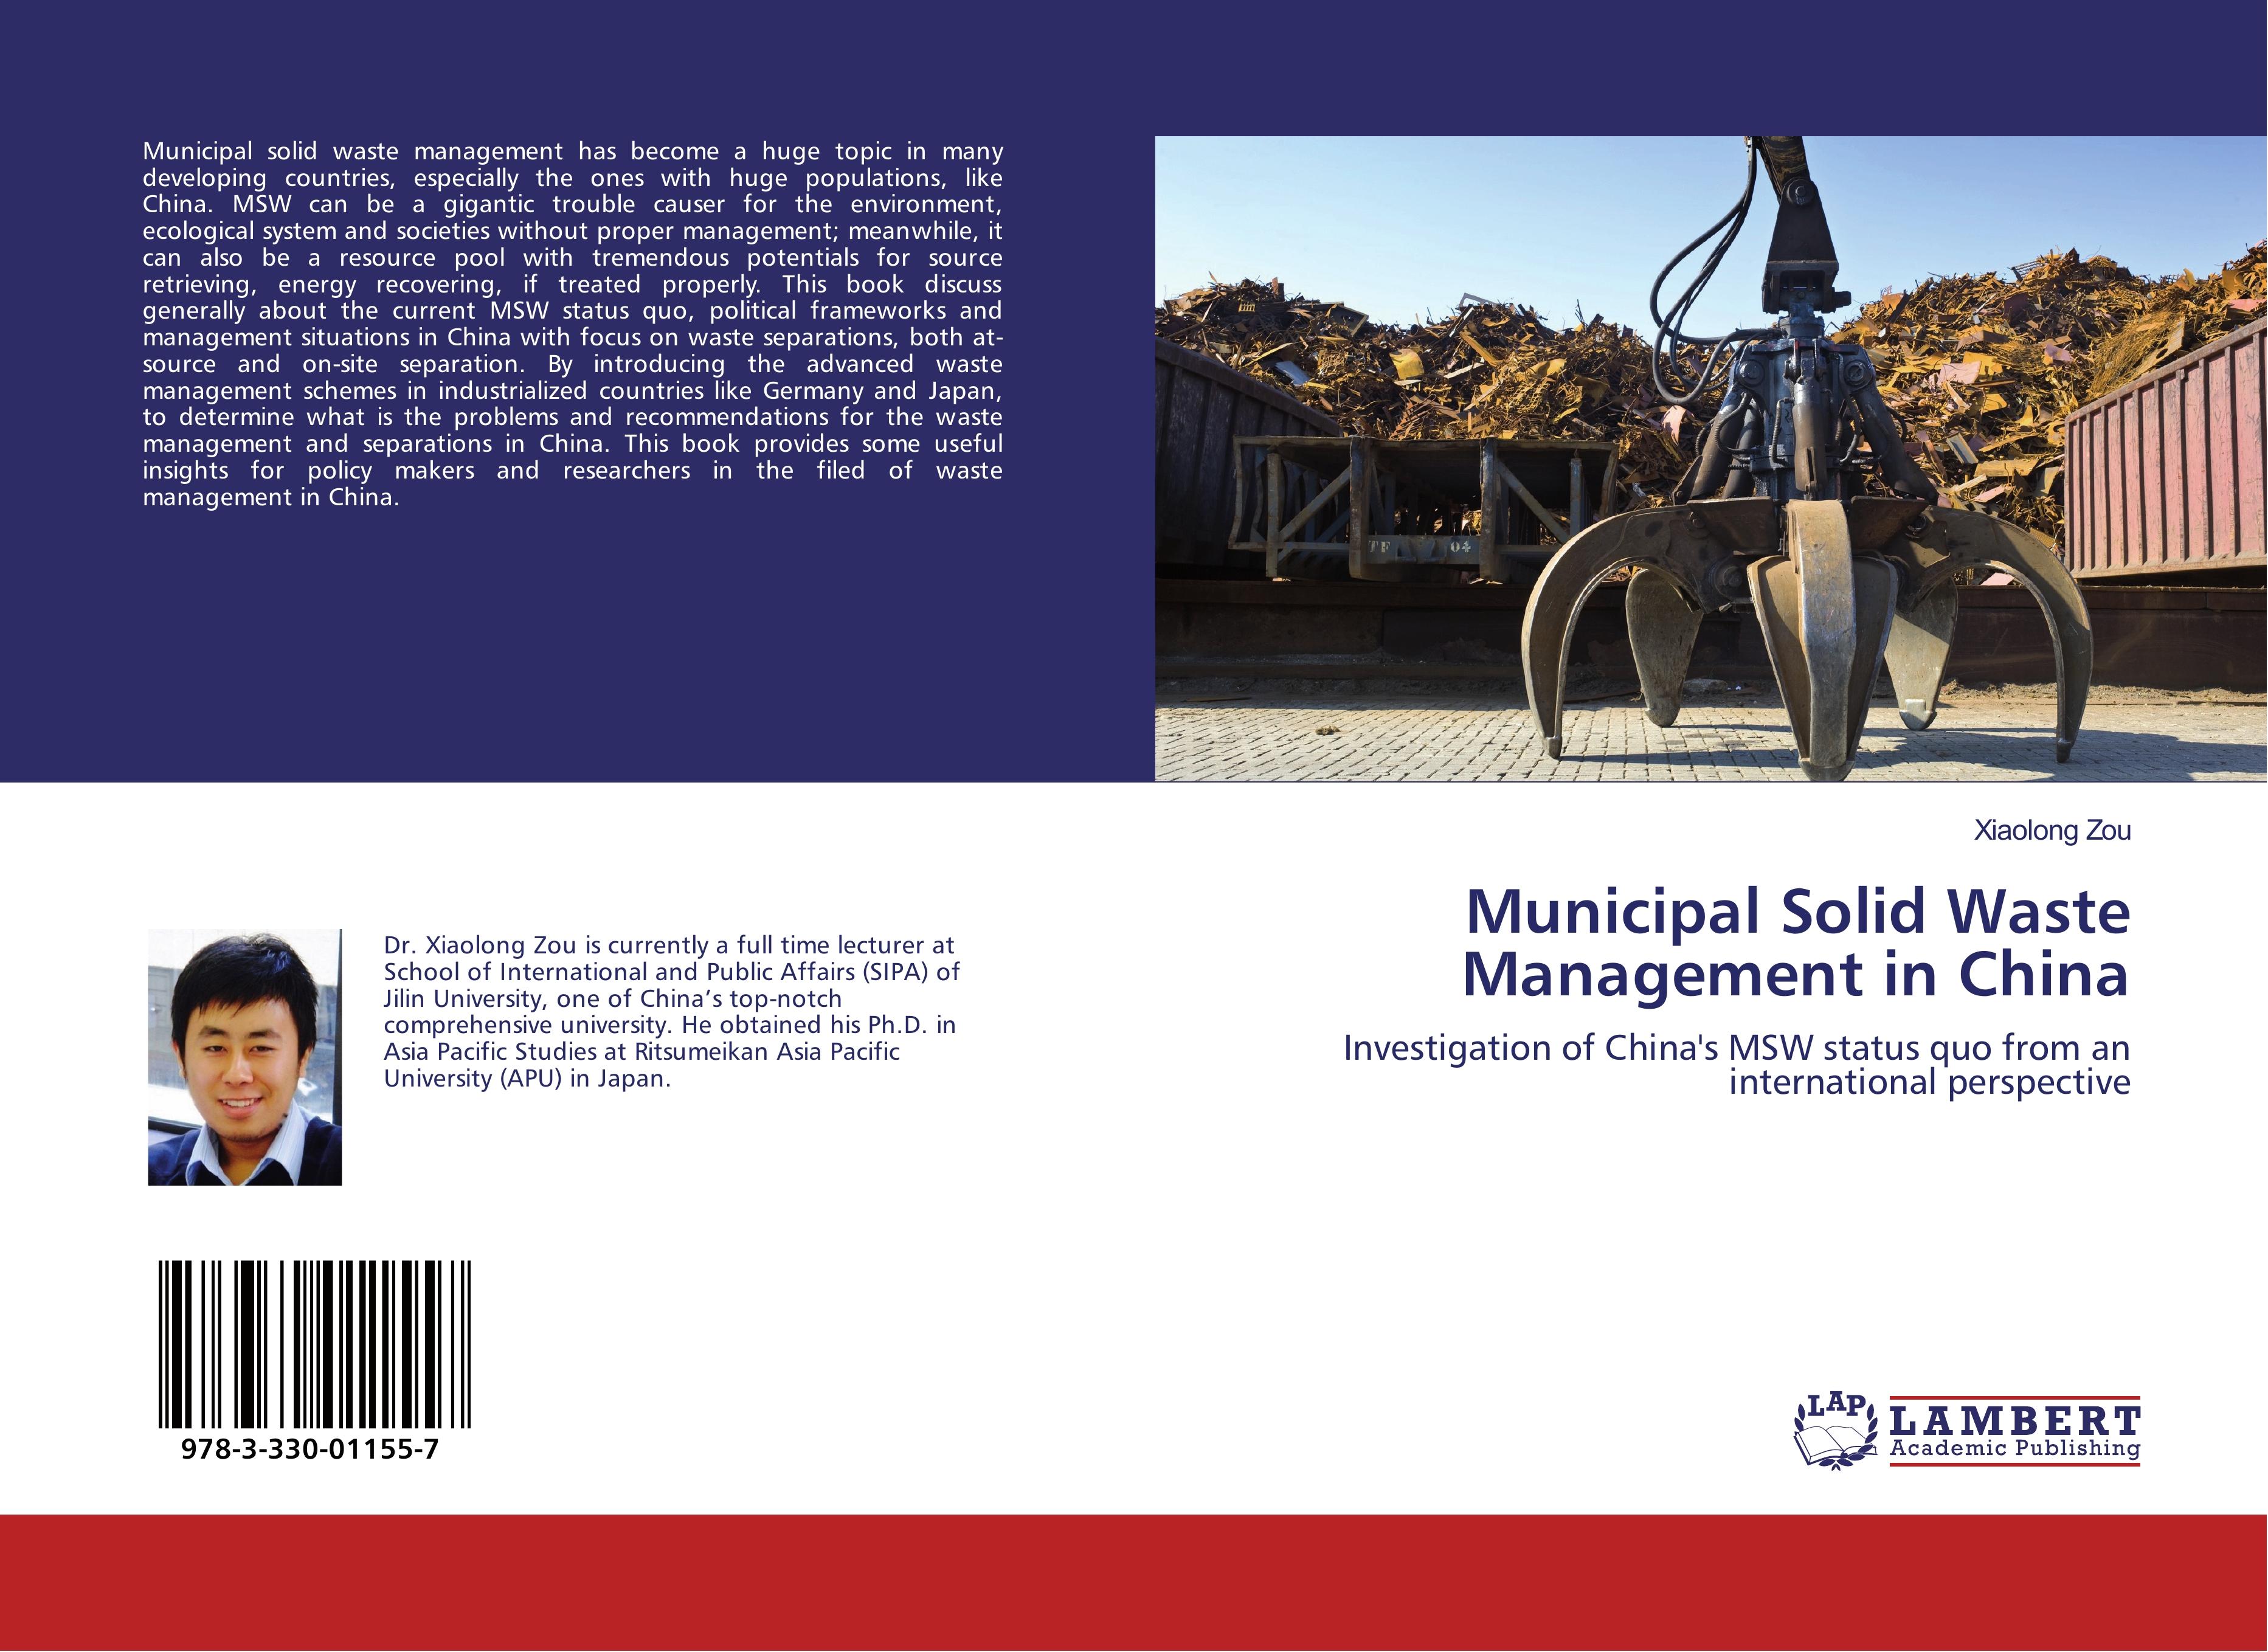 Municipal Solid Waste Management in China - Xiaolong Zou